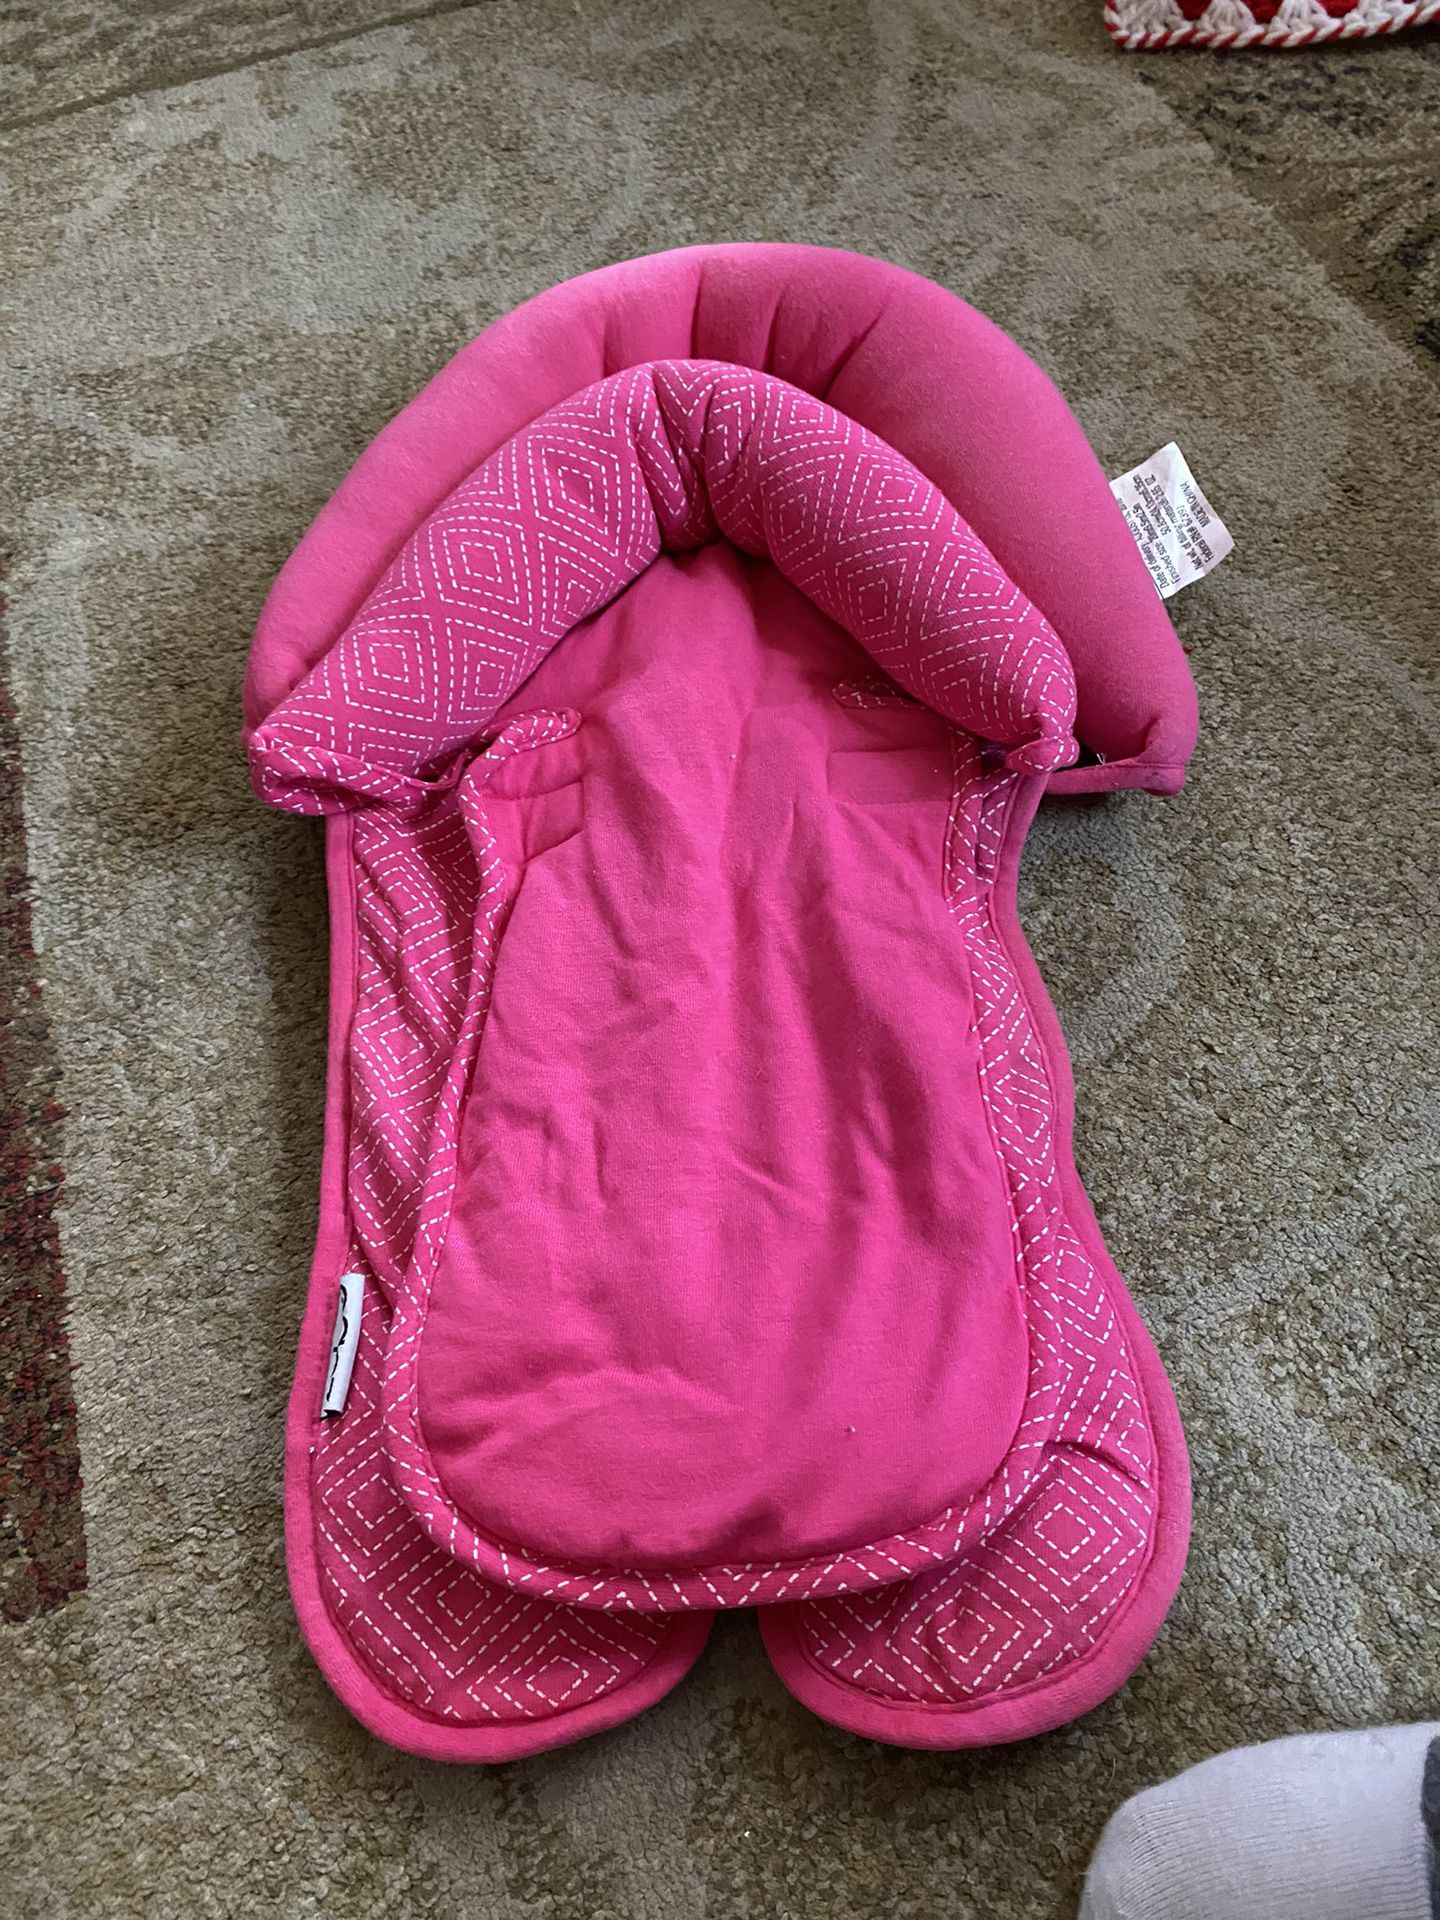 Infant Car seat Insert